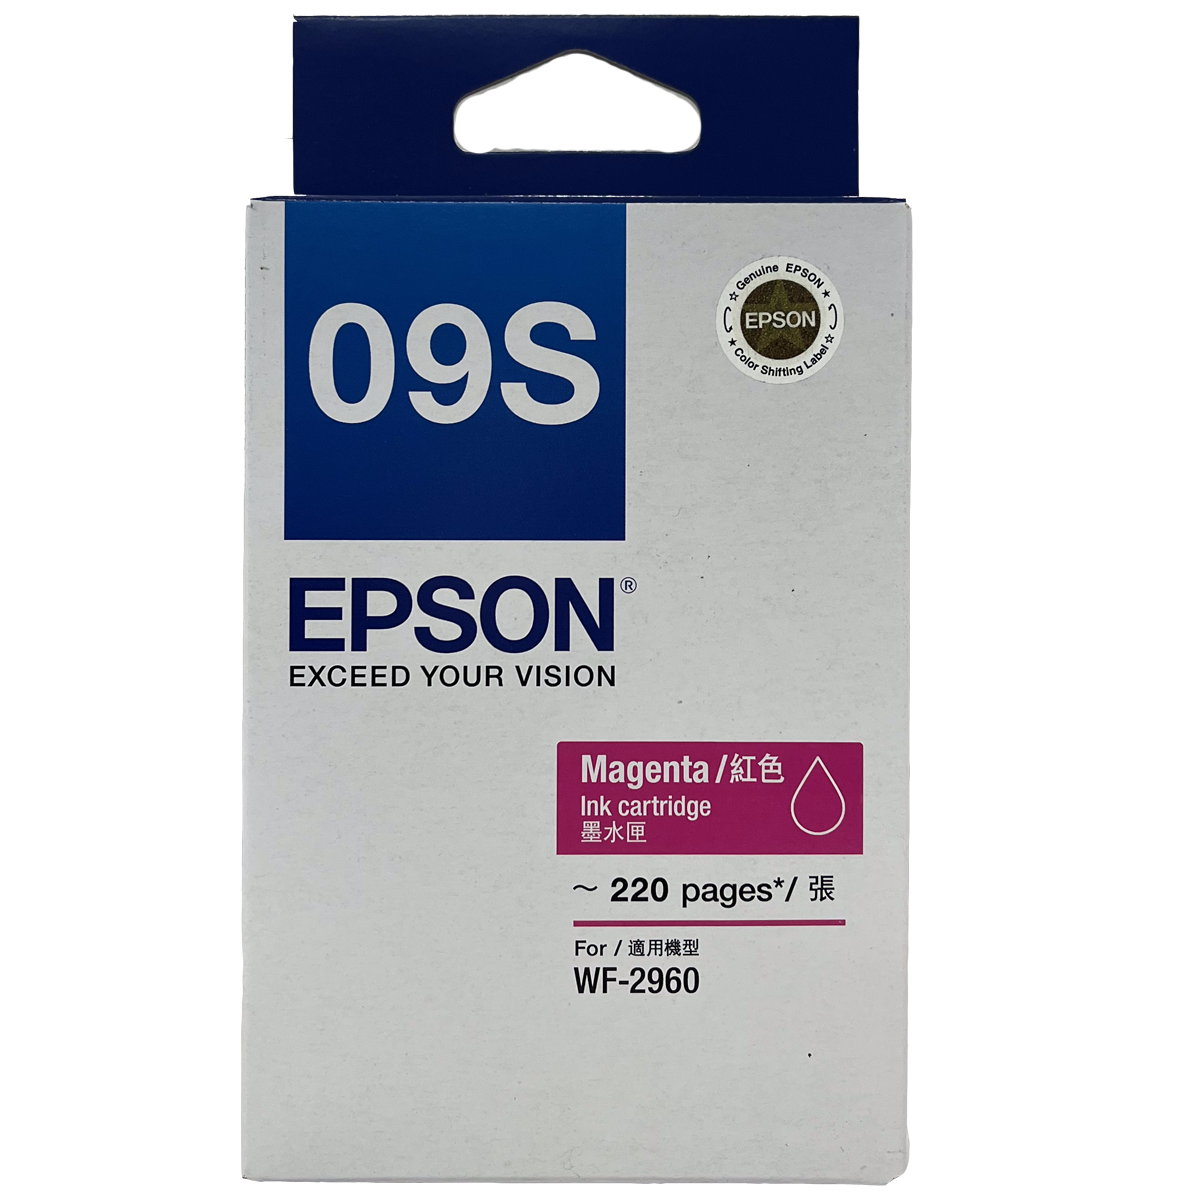 EPSON C13T09S383 MAGENTA INK CARTRIDGE FOR WORKFORCE 2960